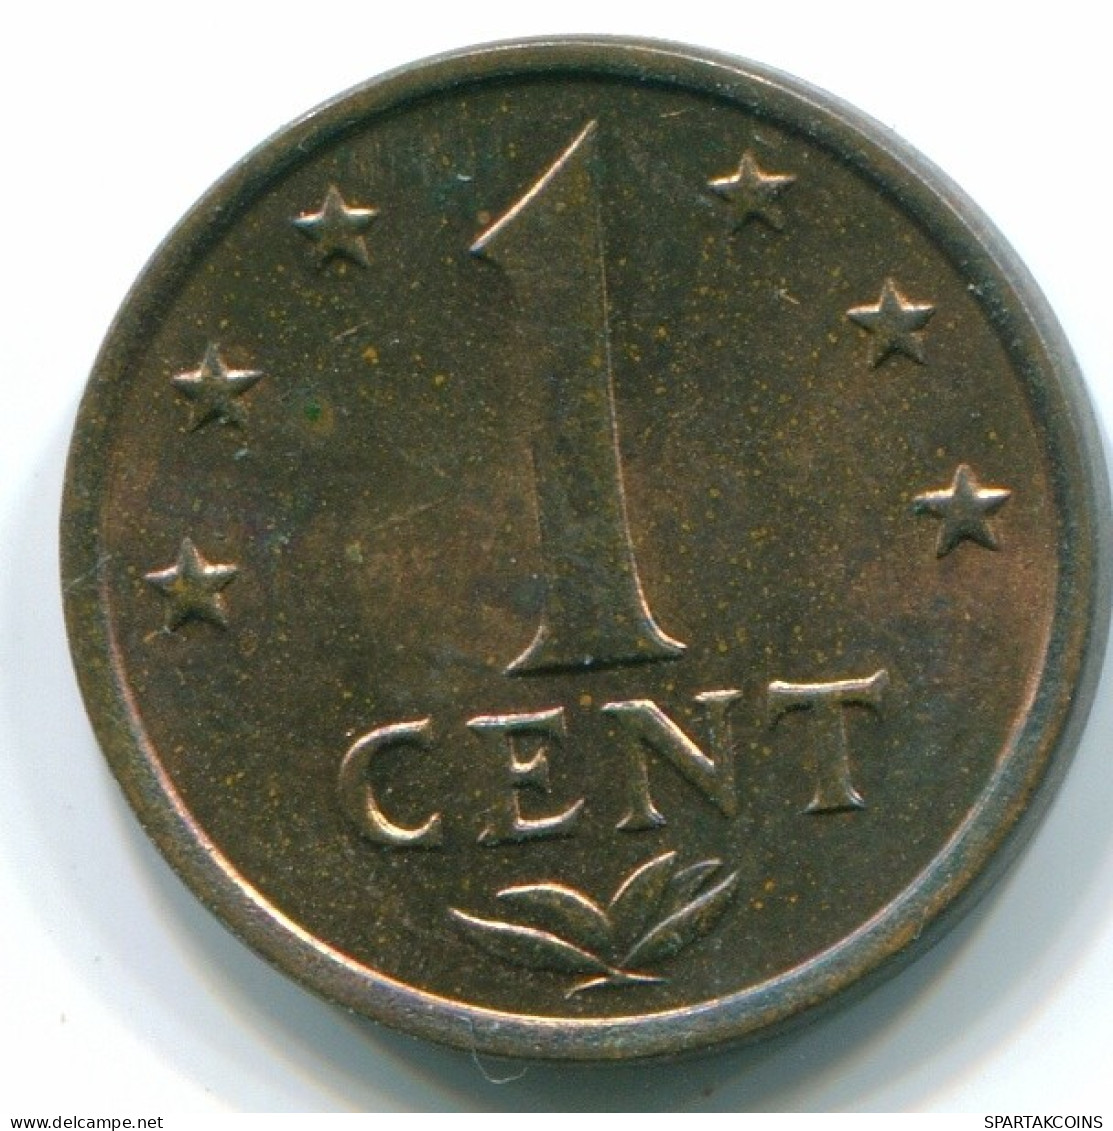 1 CENT 1973 NETHERLANDS ANTILLES Bronze Colonial Coin #S10653.U.A - Netherlands Antilles